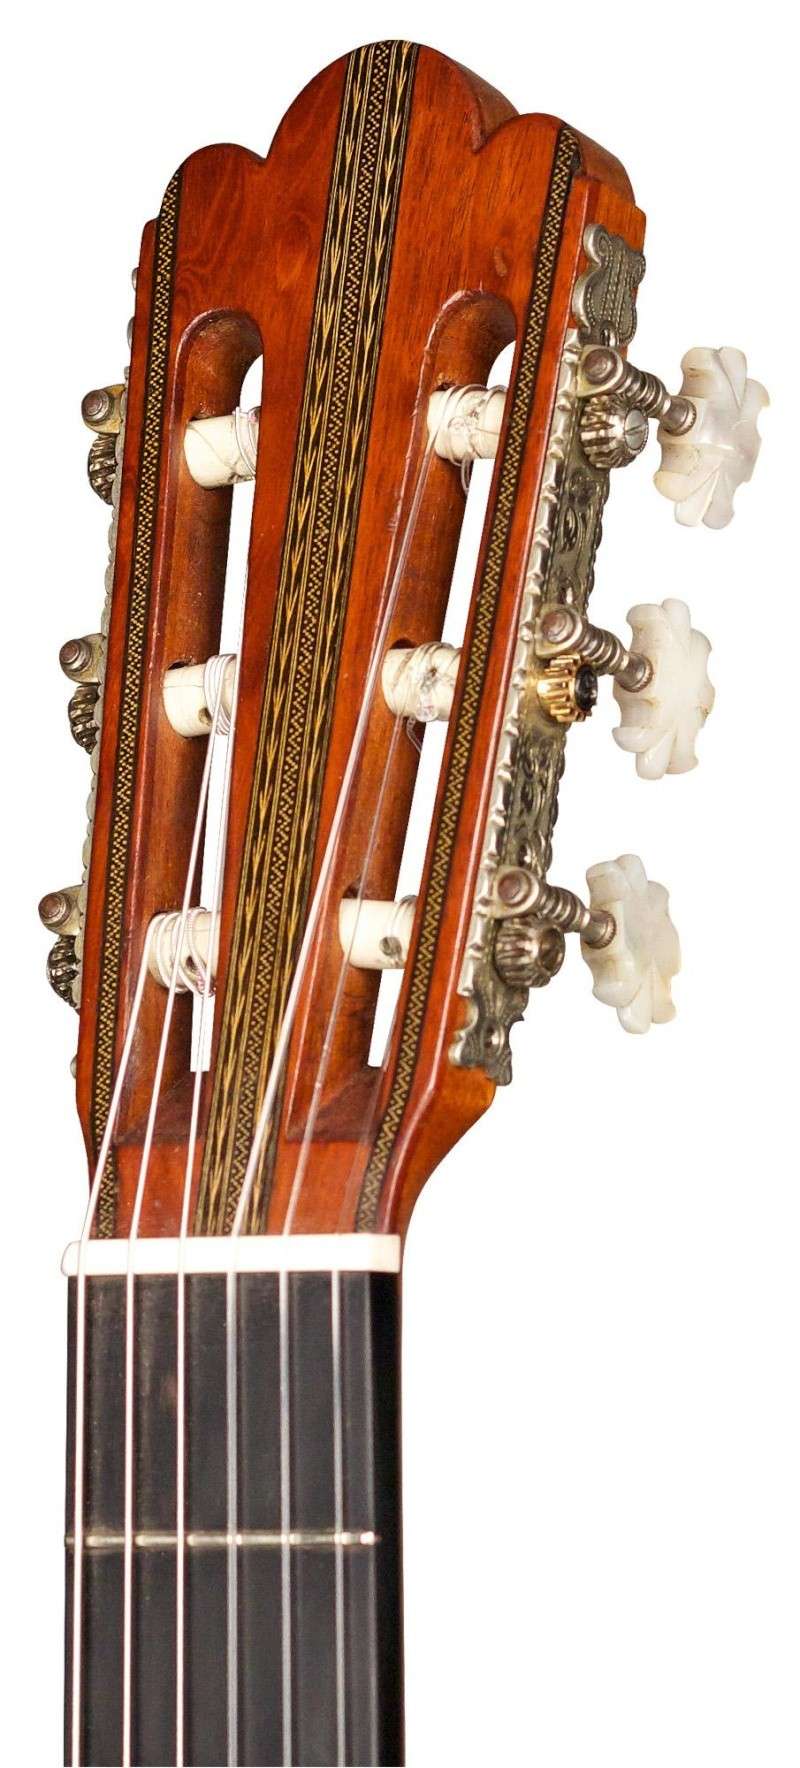  Guitares Réplica ANTONIO de TORRES et SELMER Réplica par LAURENT (Coligny ) A0f7df10